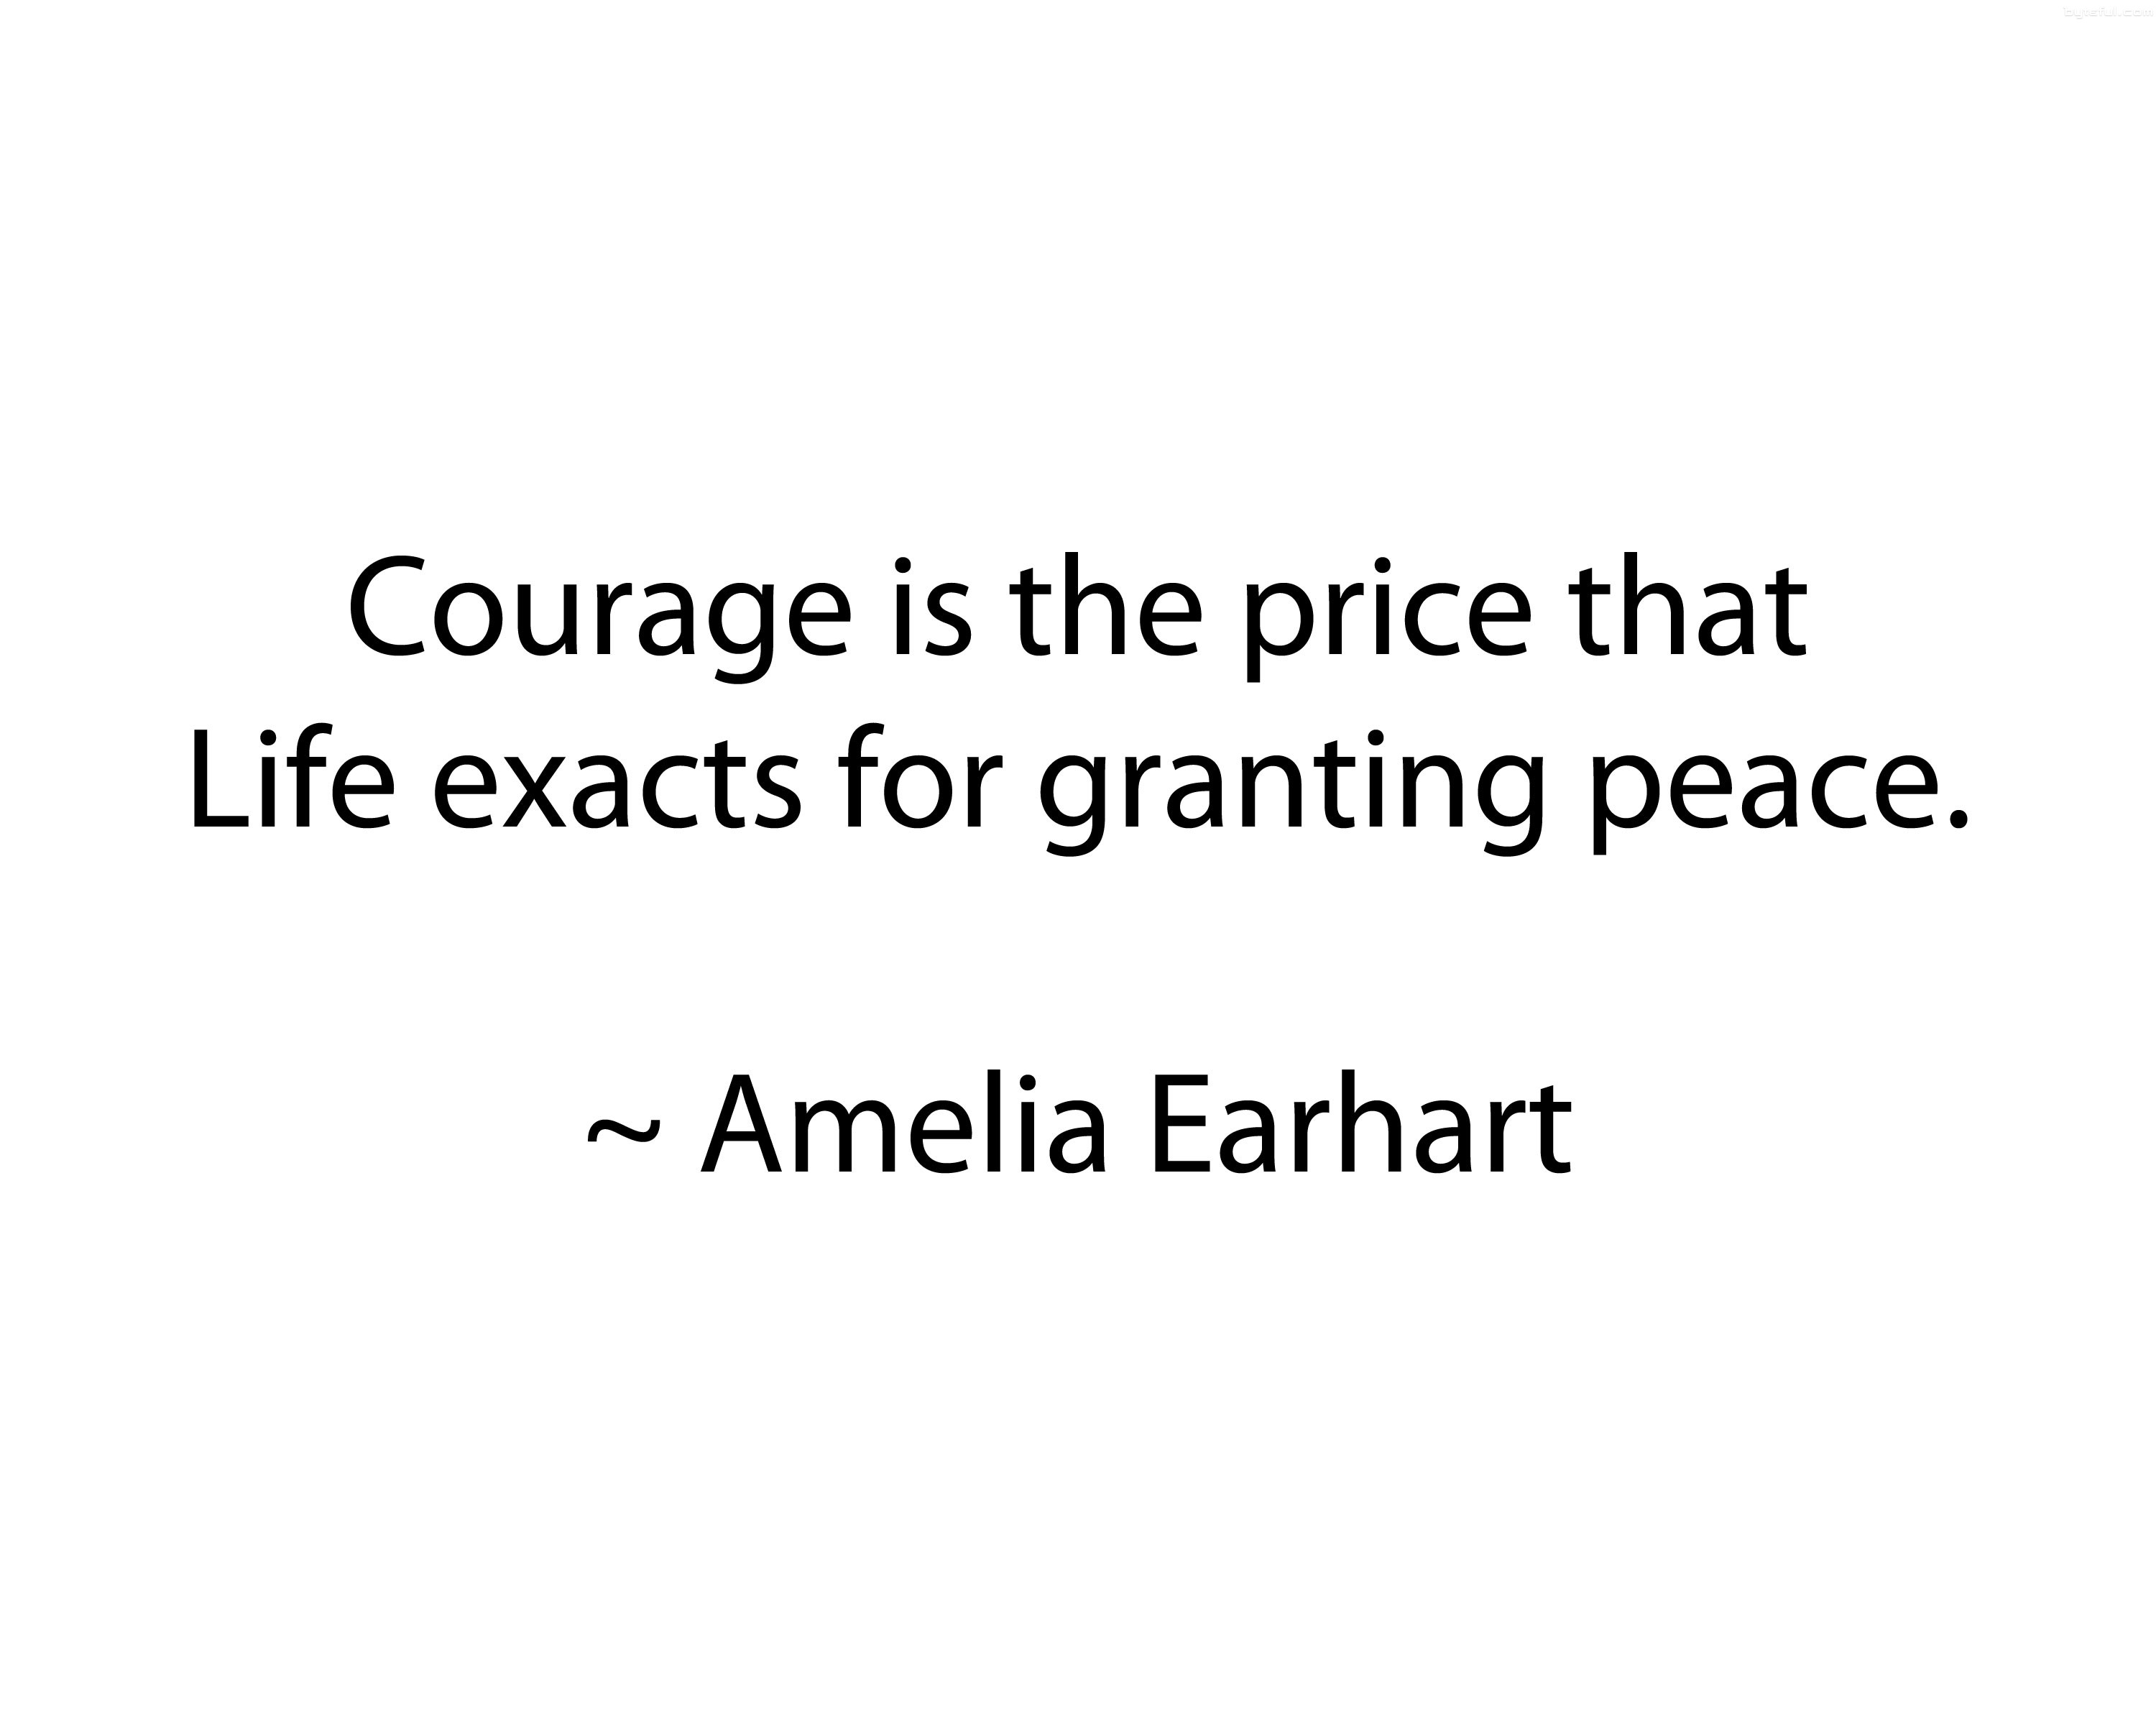 Amelia Earhart's quote #6